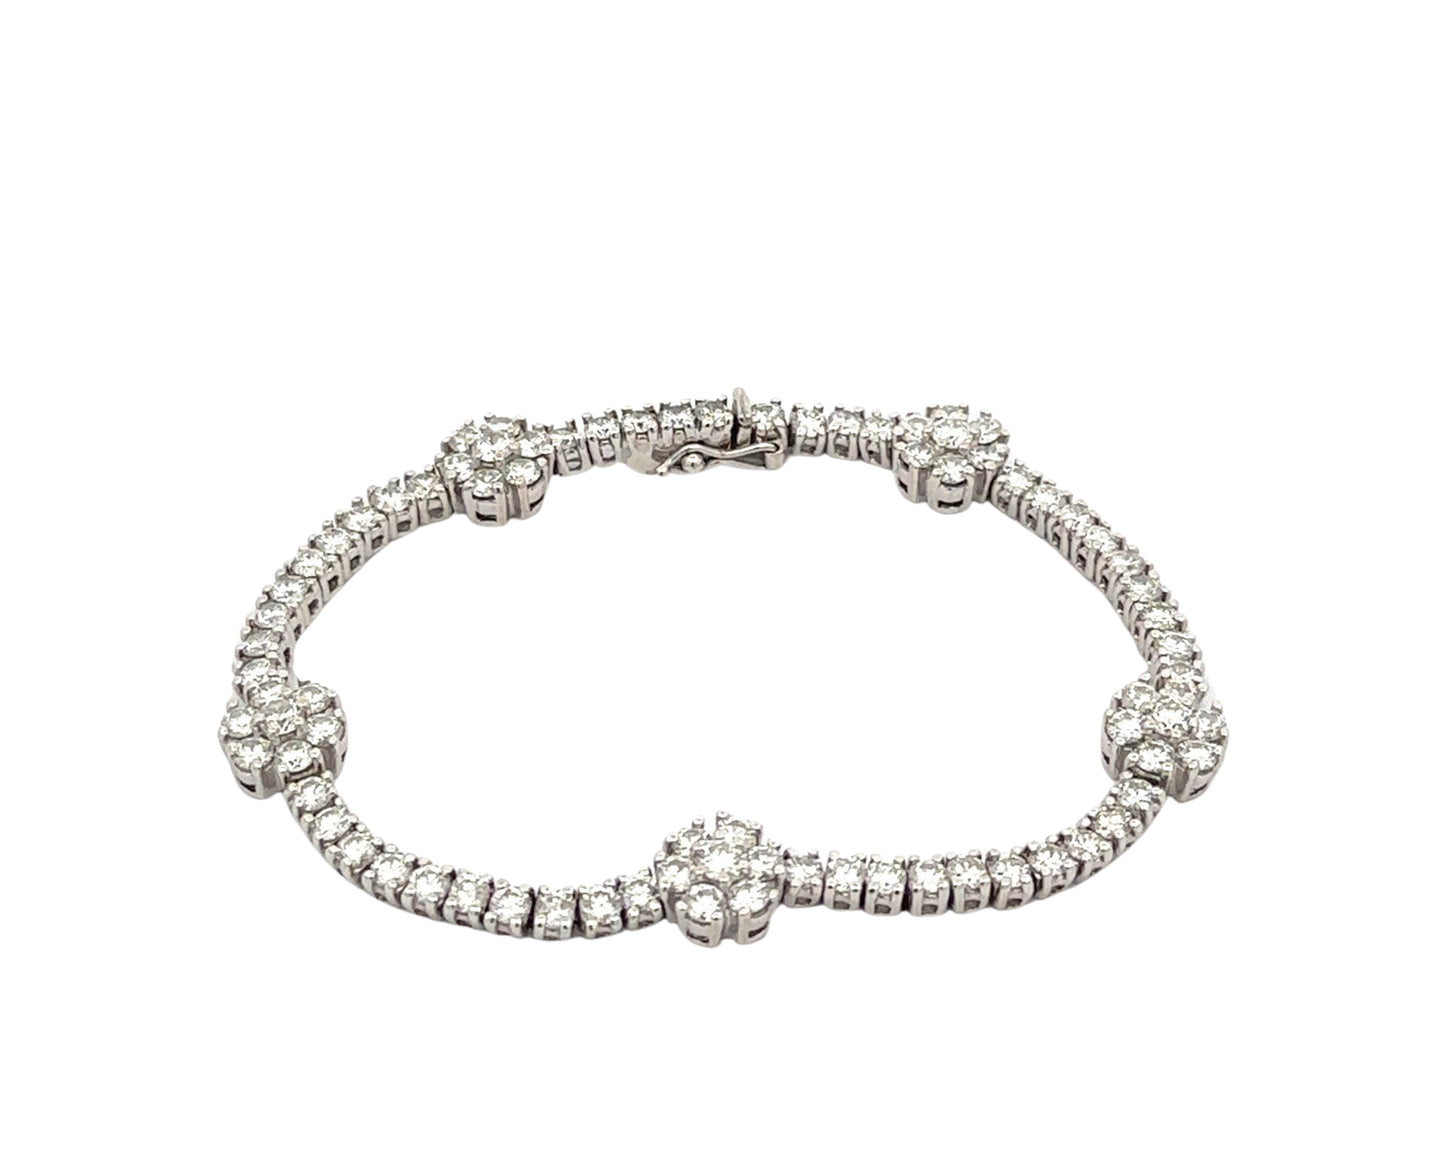 Diamond flower tennis bracelet